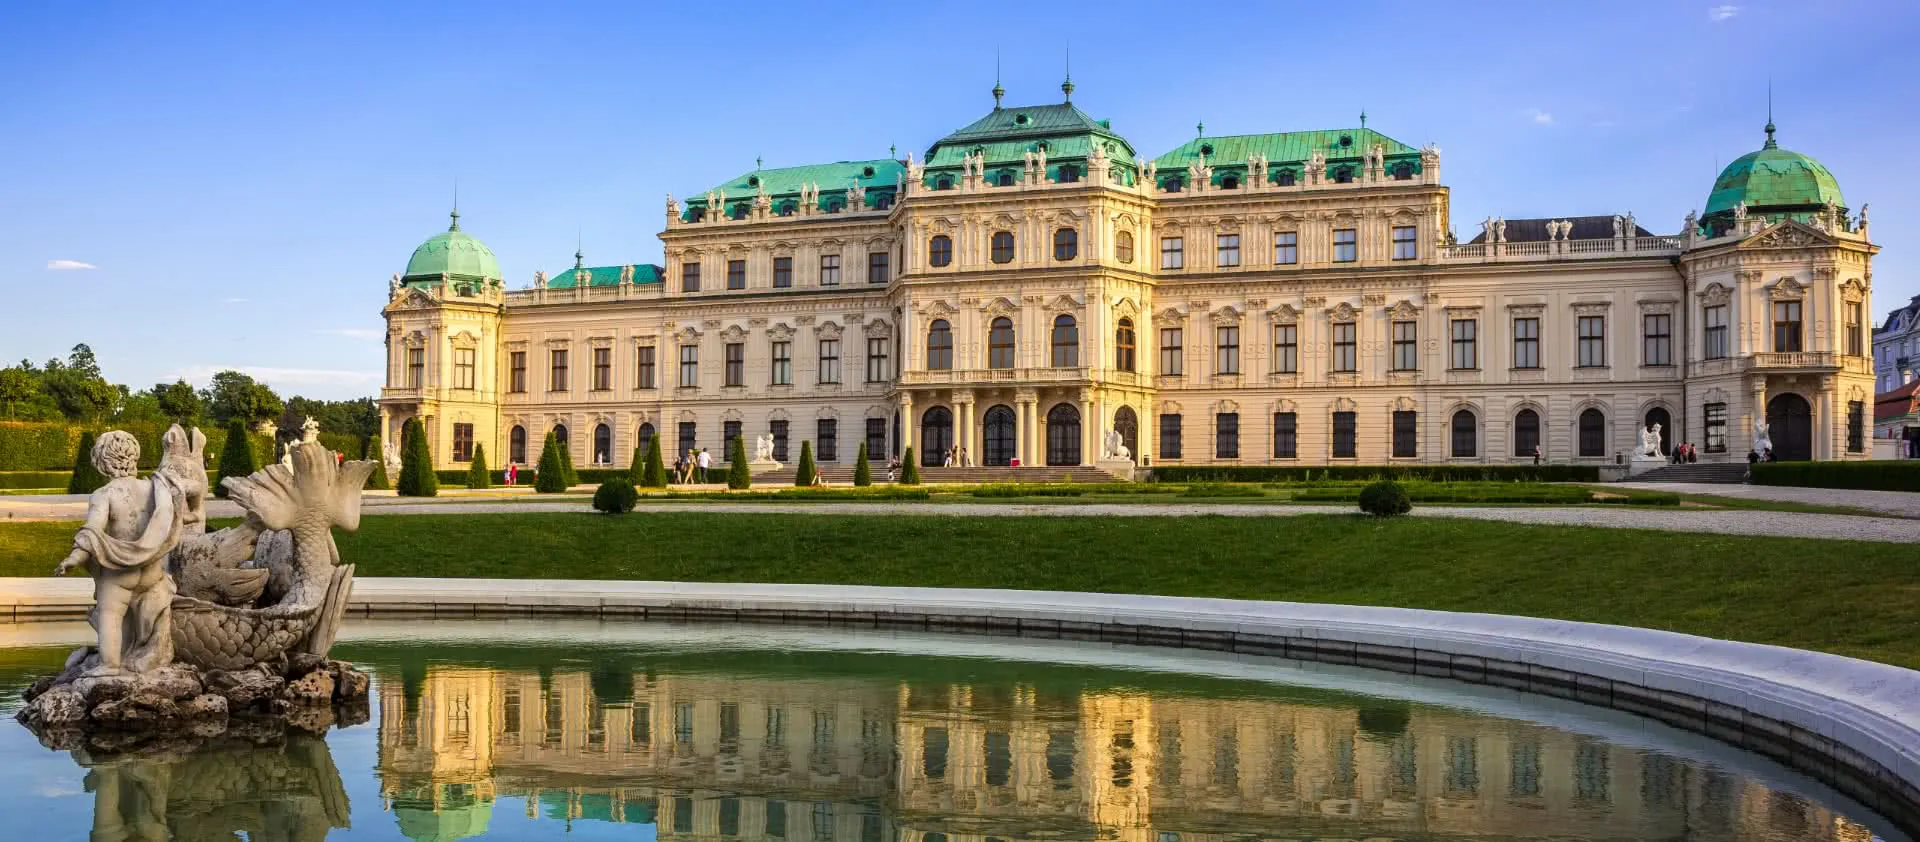 Vienna - the destination for exhibition hotels